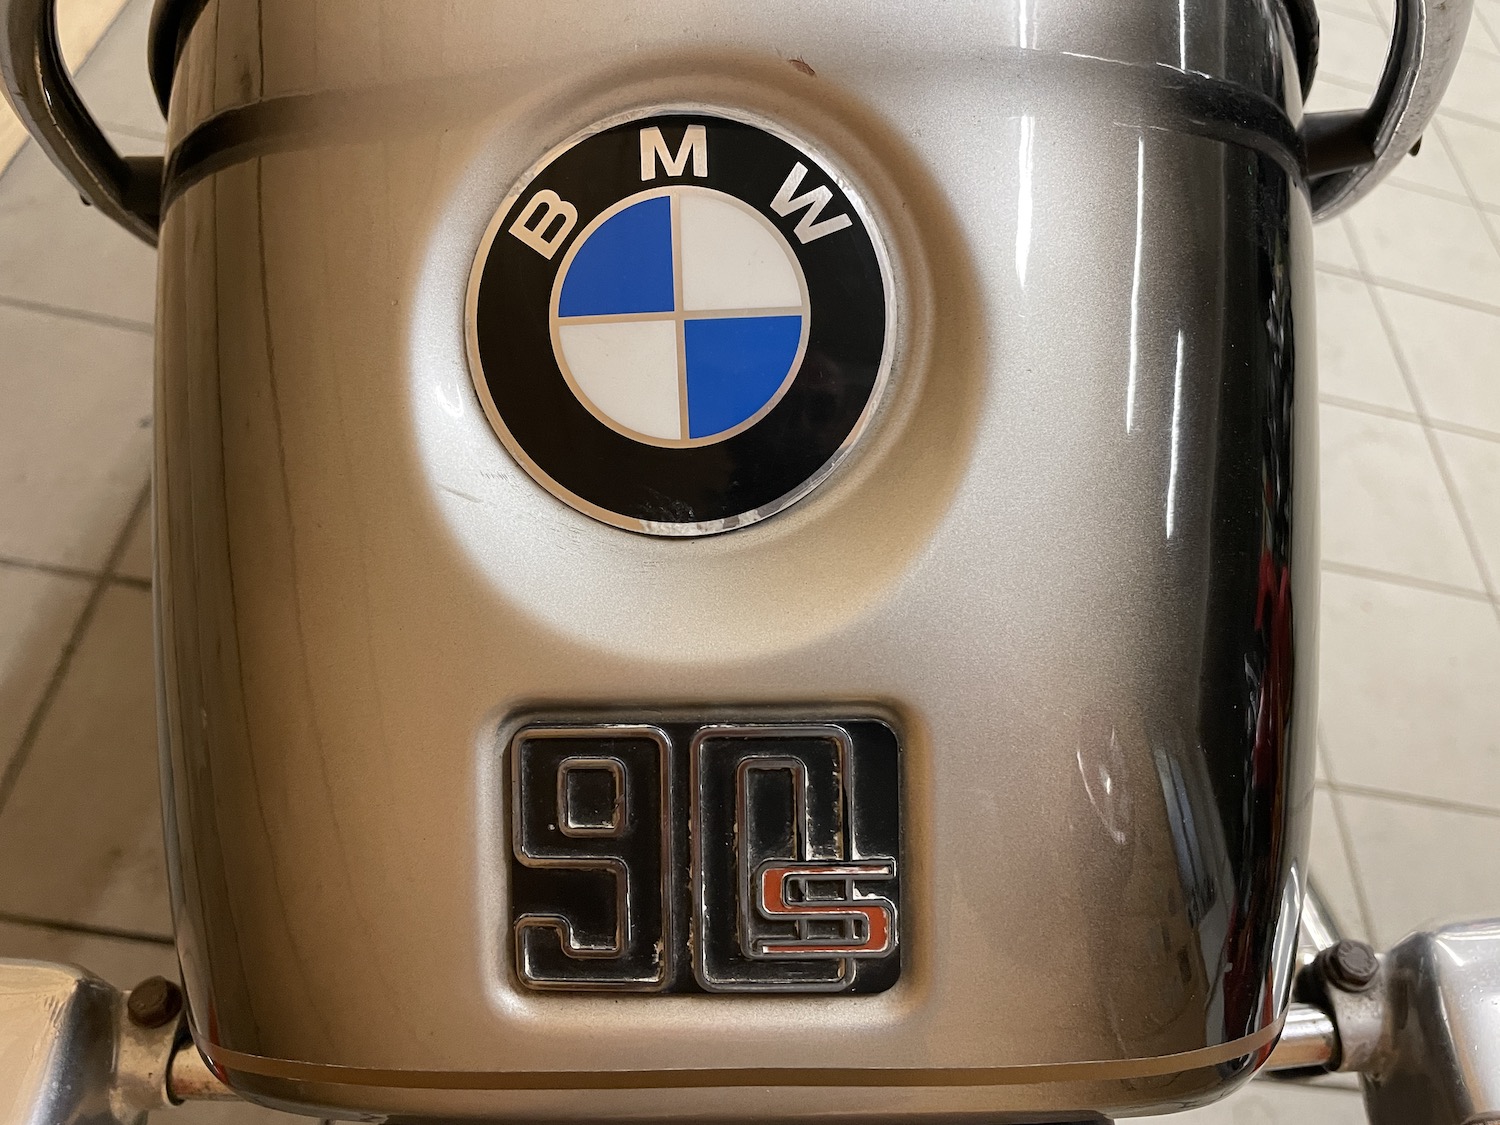 BMW_R90s_74_cezanne_classic_motorcycle_3_111-127.jpg